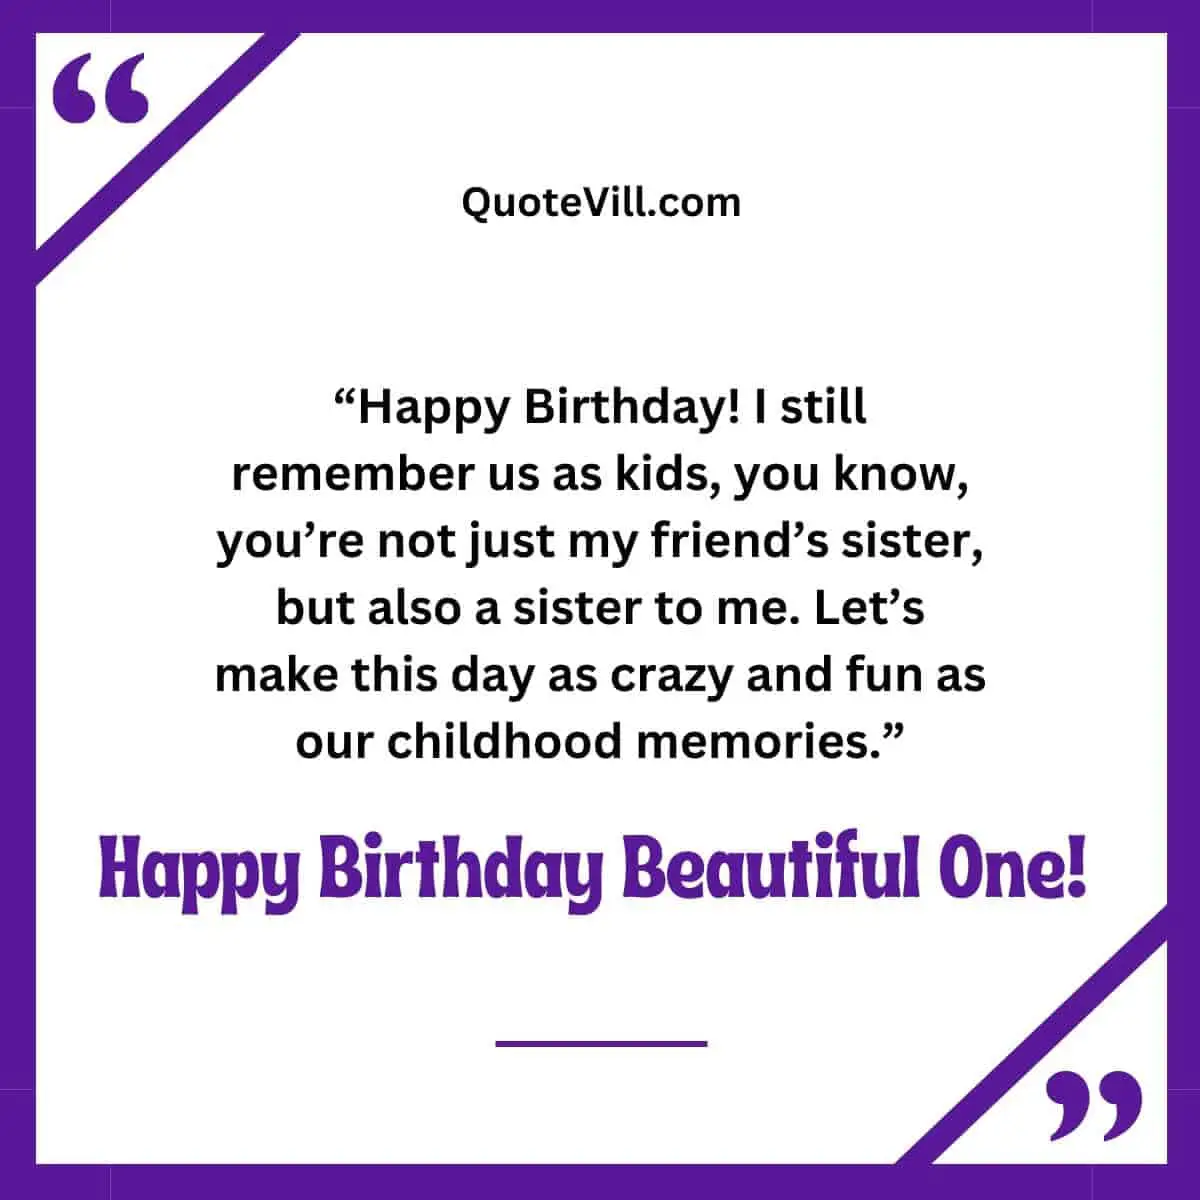 Birthday Greetings to My Friend’s Sister